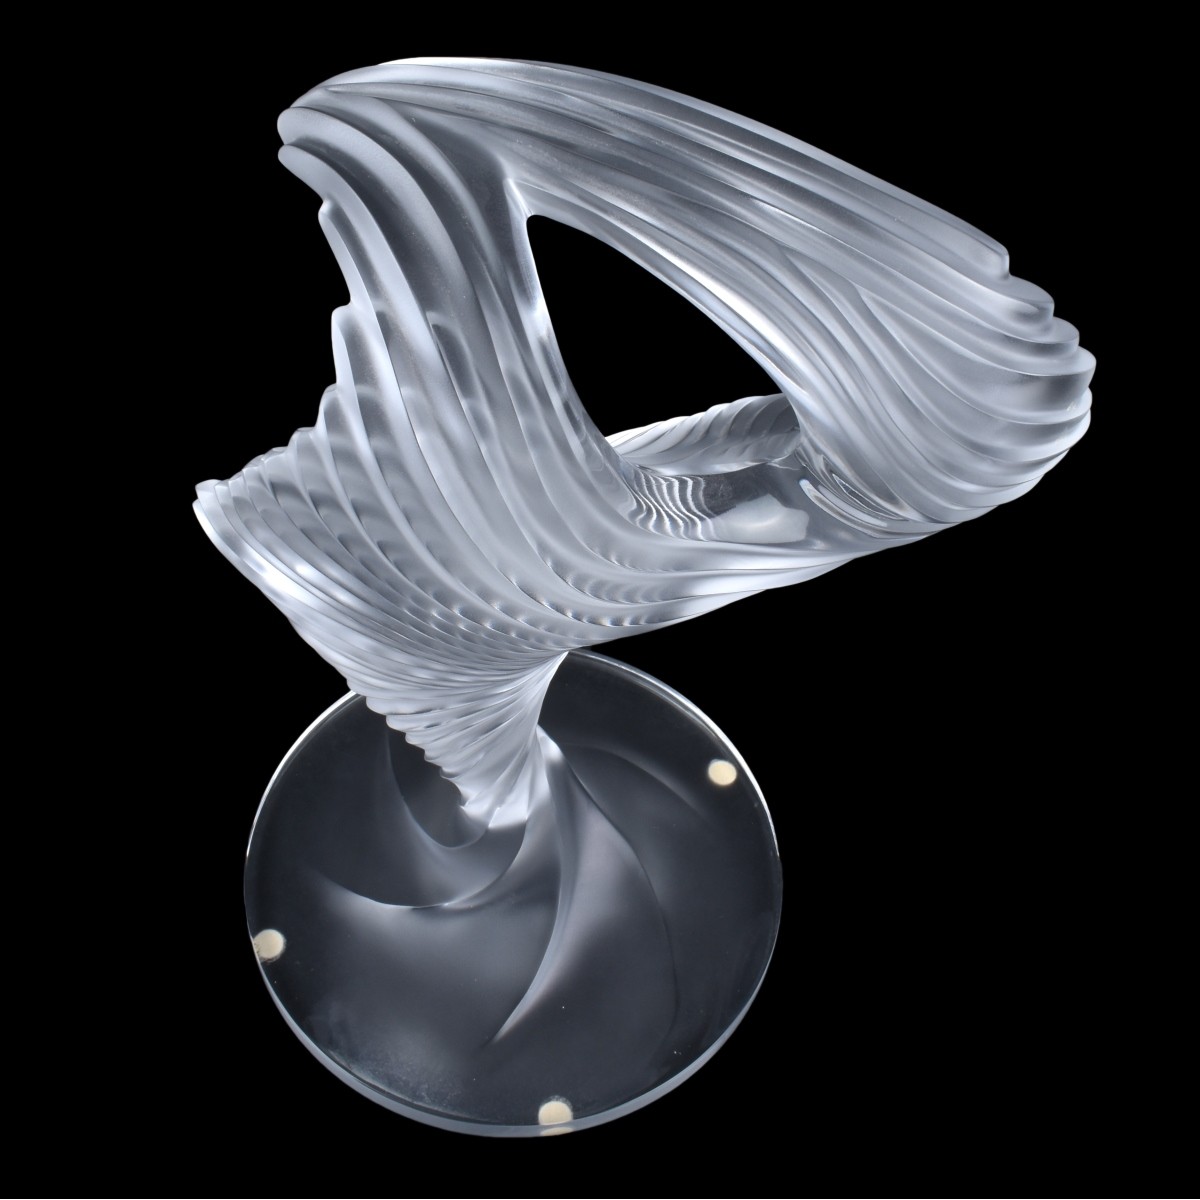 Lalique "Trophee" Crystal Sculpture